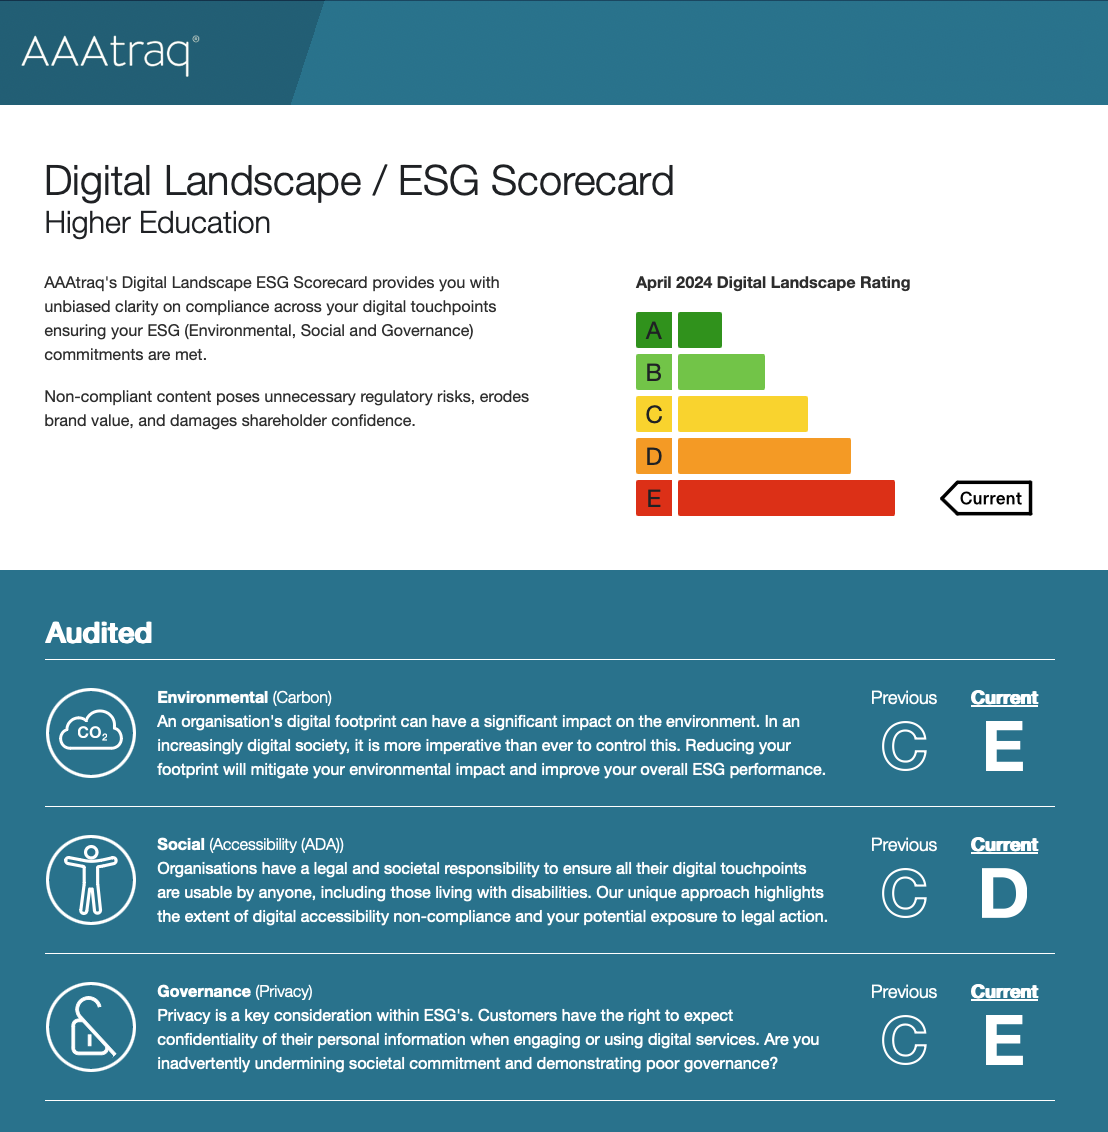 EPS / Equity Performance SCORECARD / ESG and DE&I reported for digital landscape